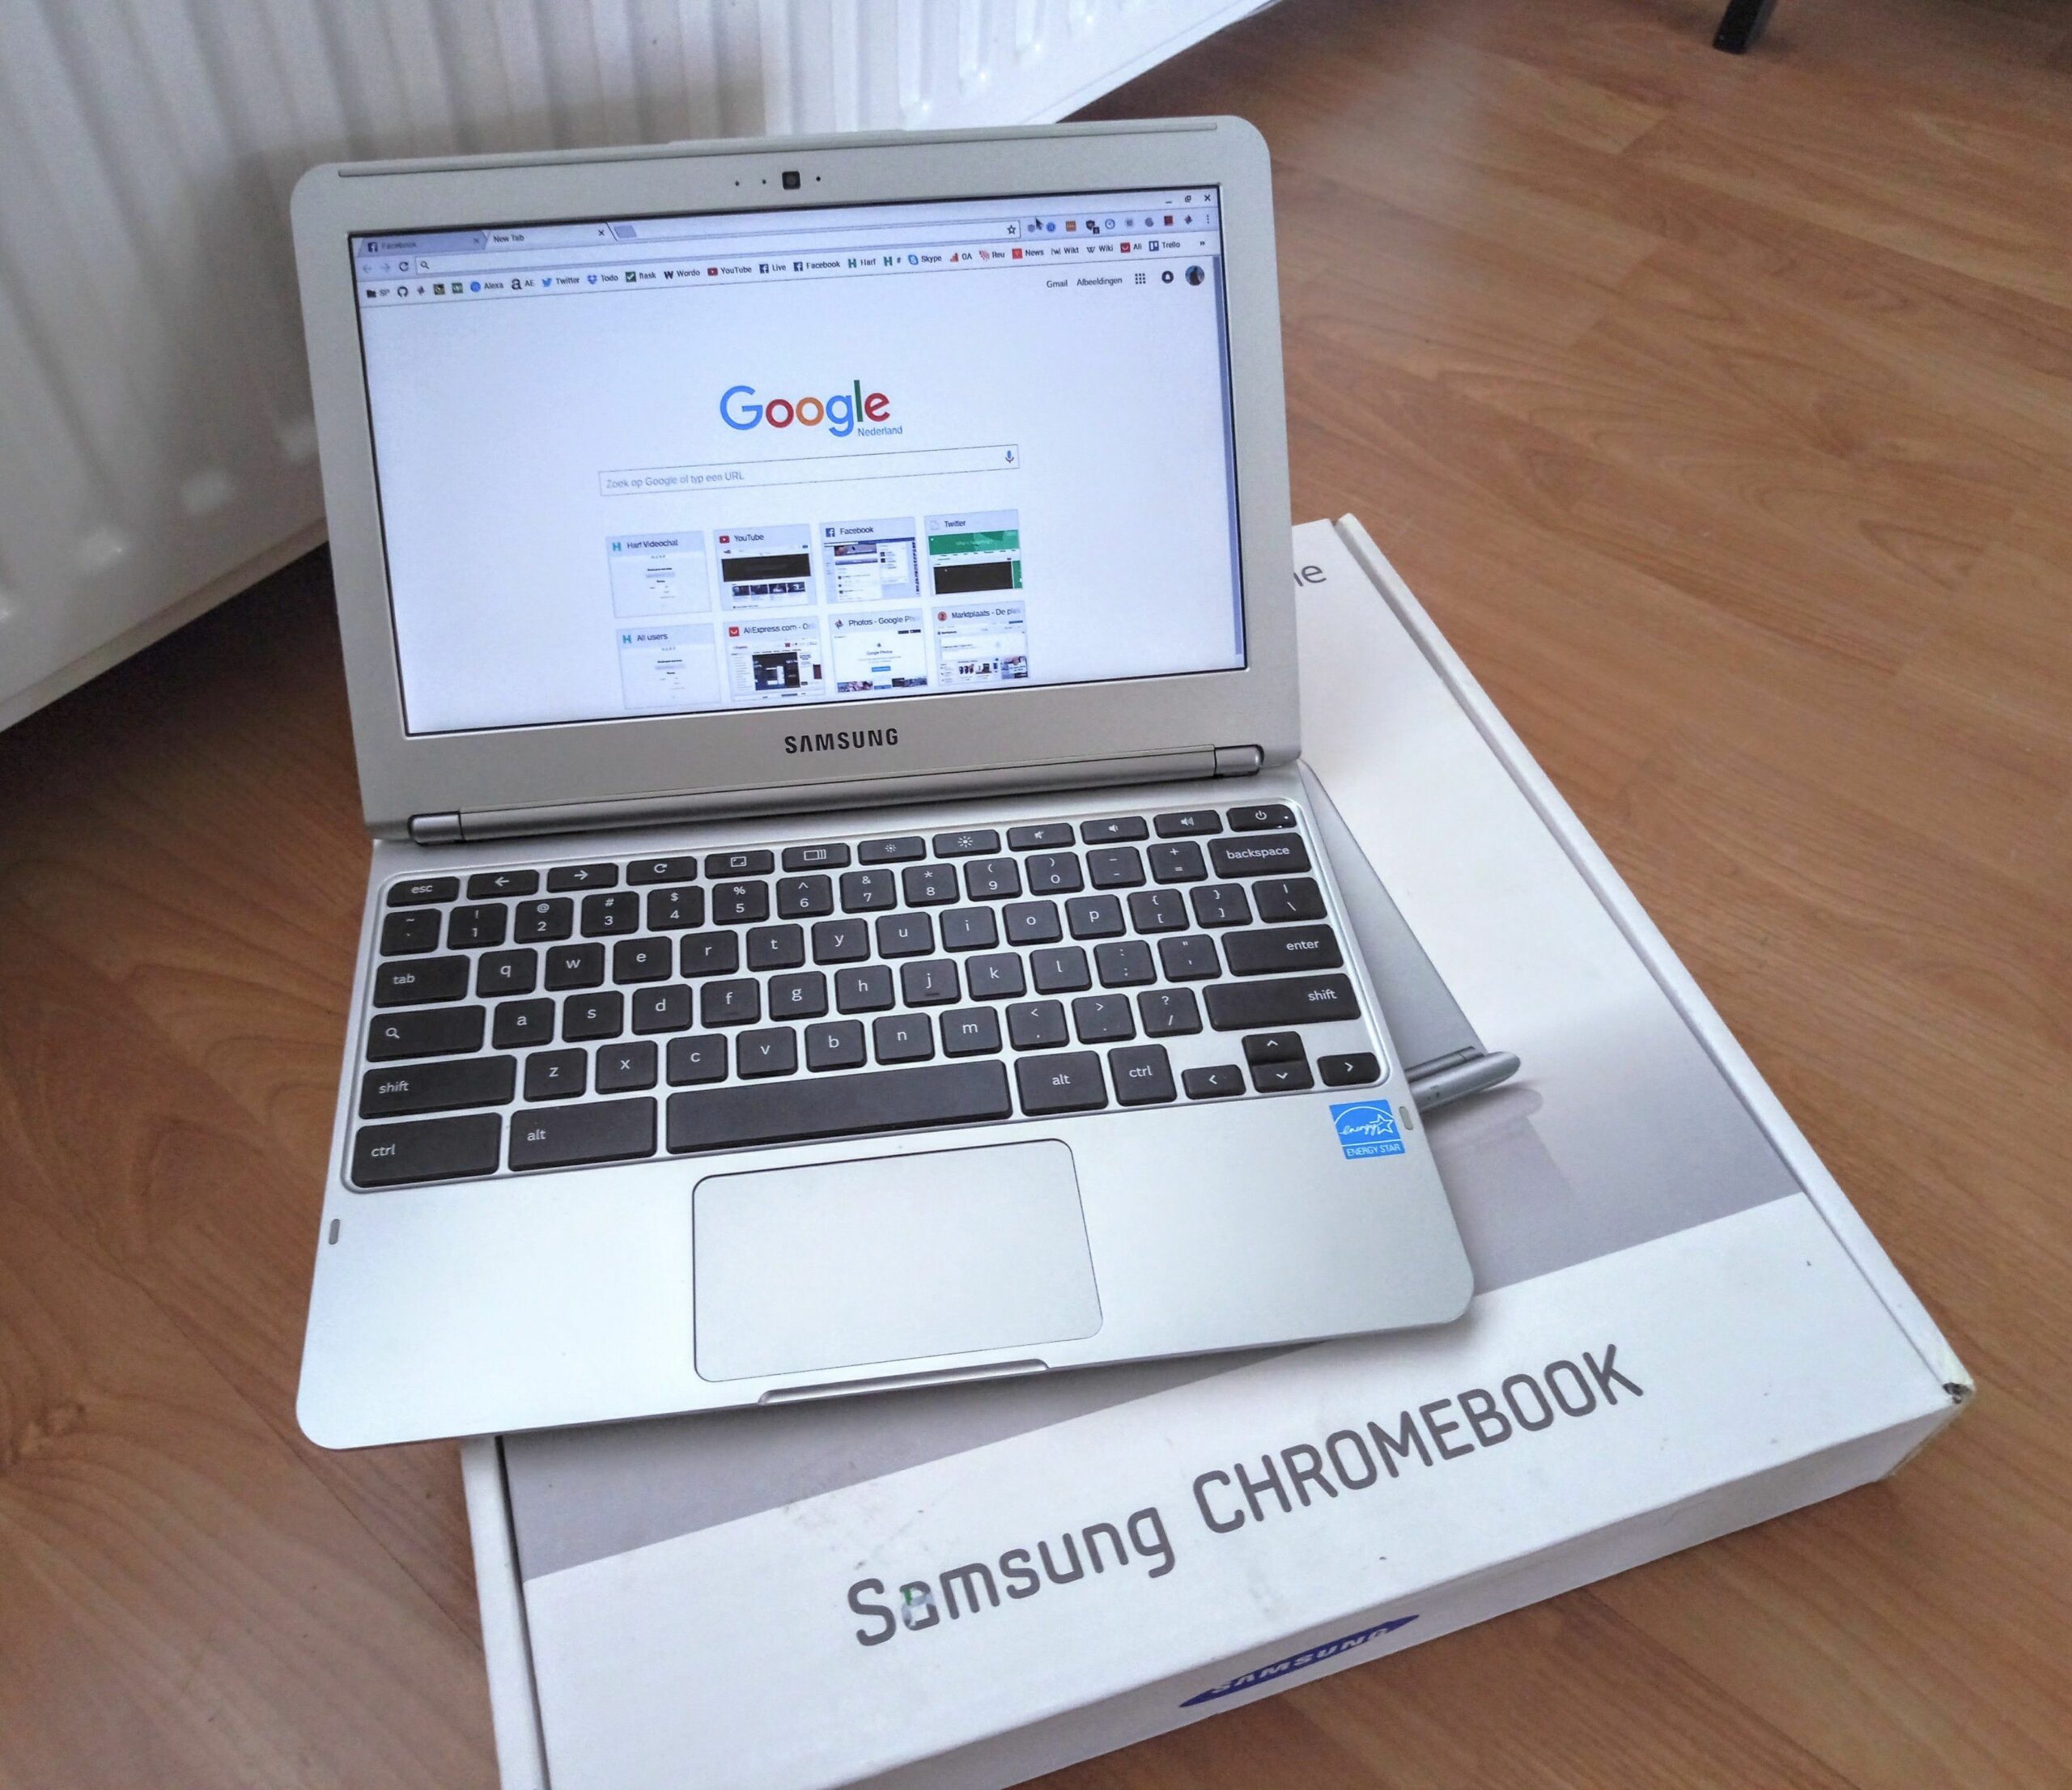 Samsung Chromebook box 5c8986a146e0fb0001a0bf7a scaled